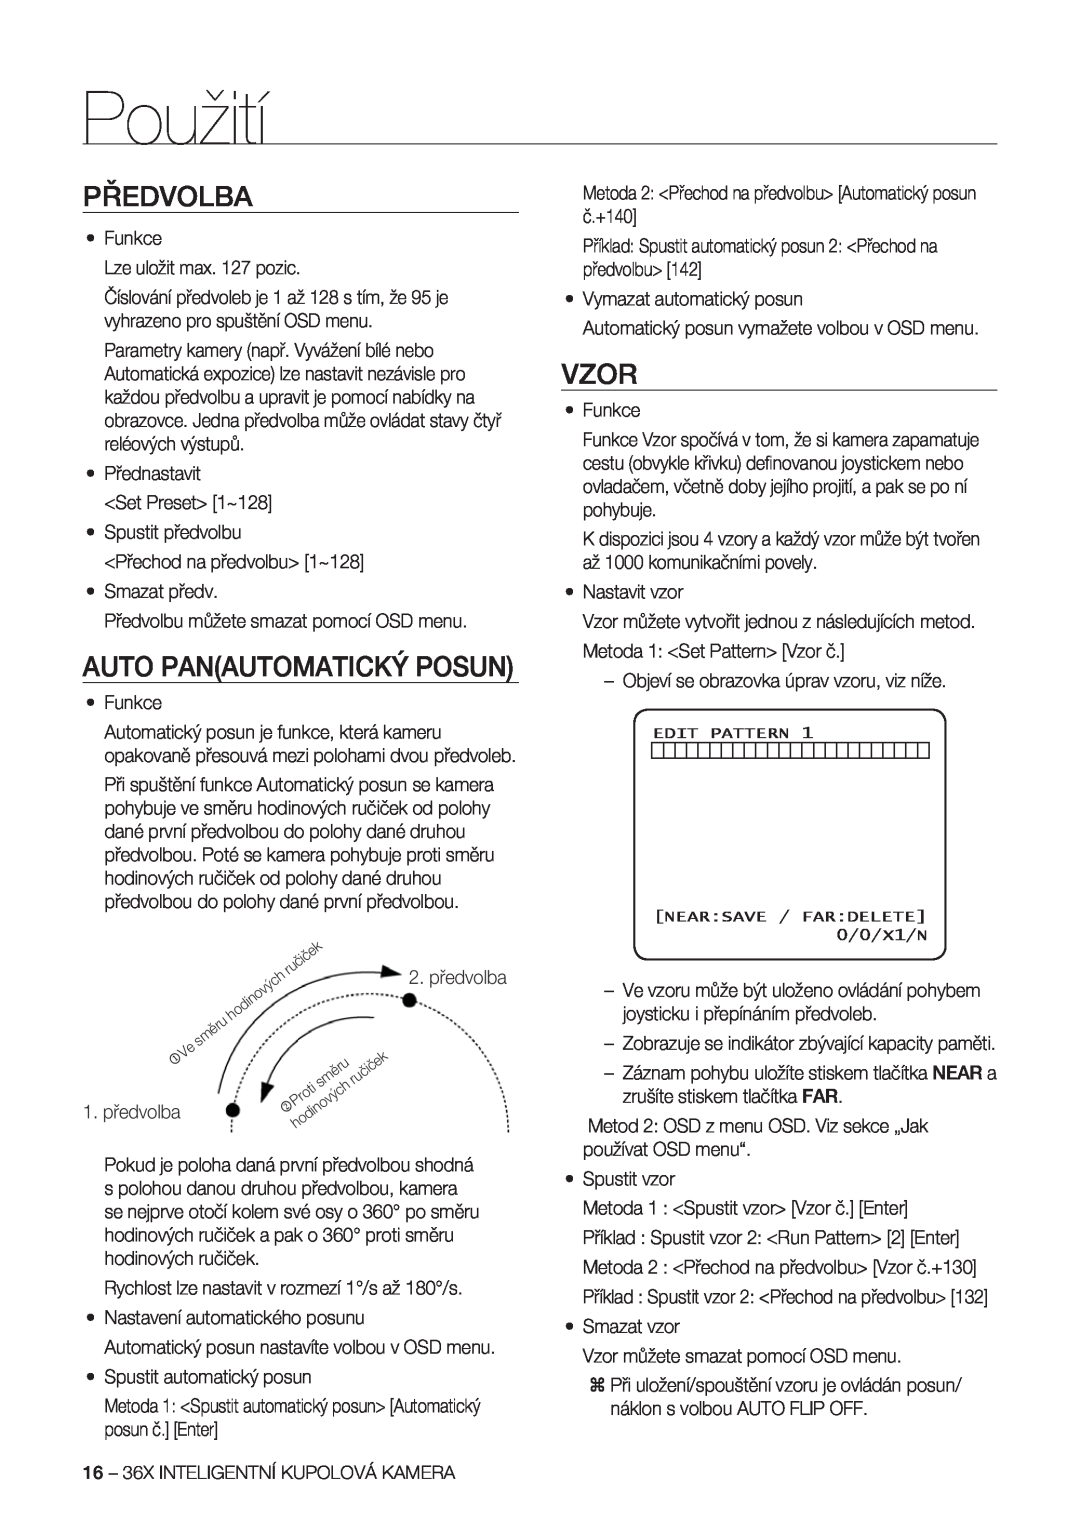 Samsung SCC-C7478P manual Předvolba, Auto Panautomatický Posun, Vzor, Použití 